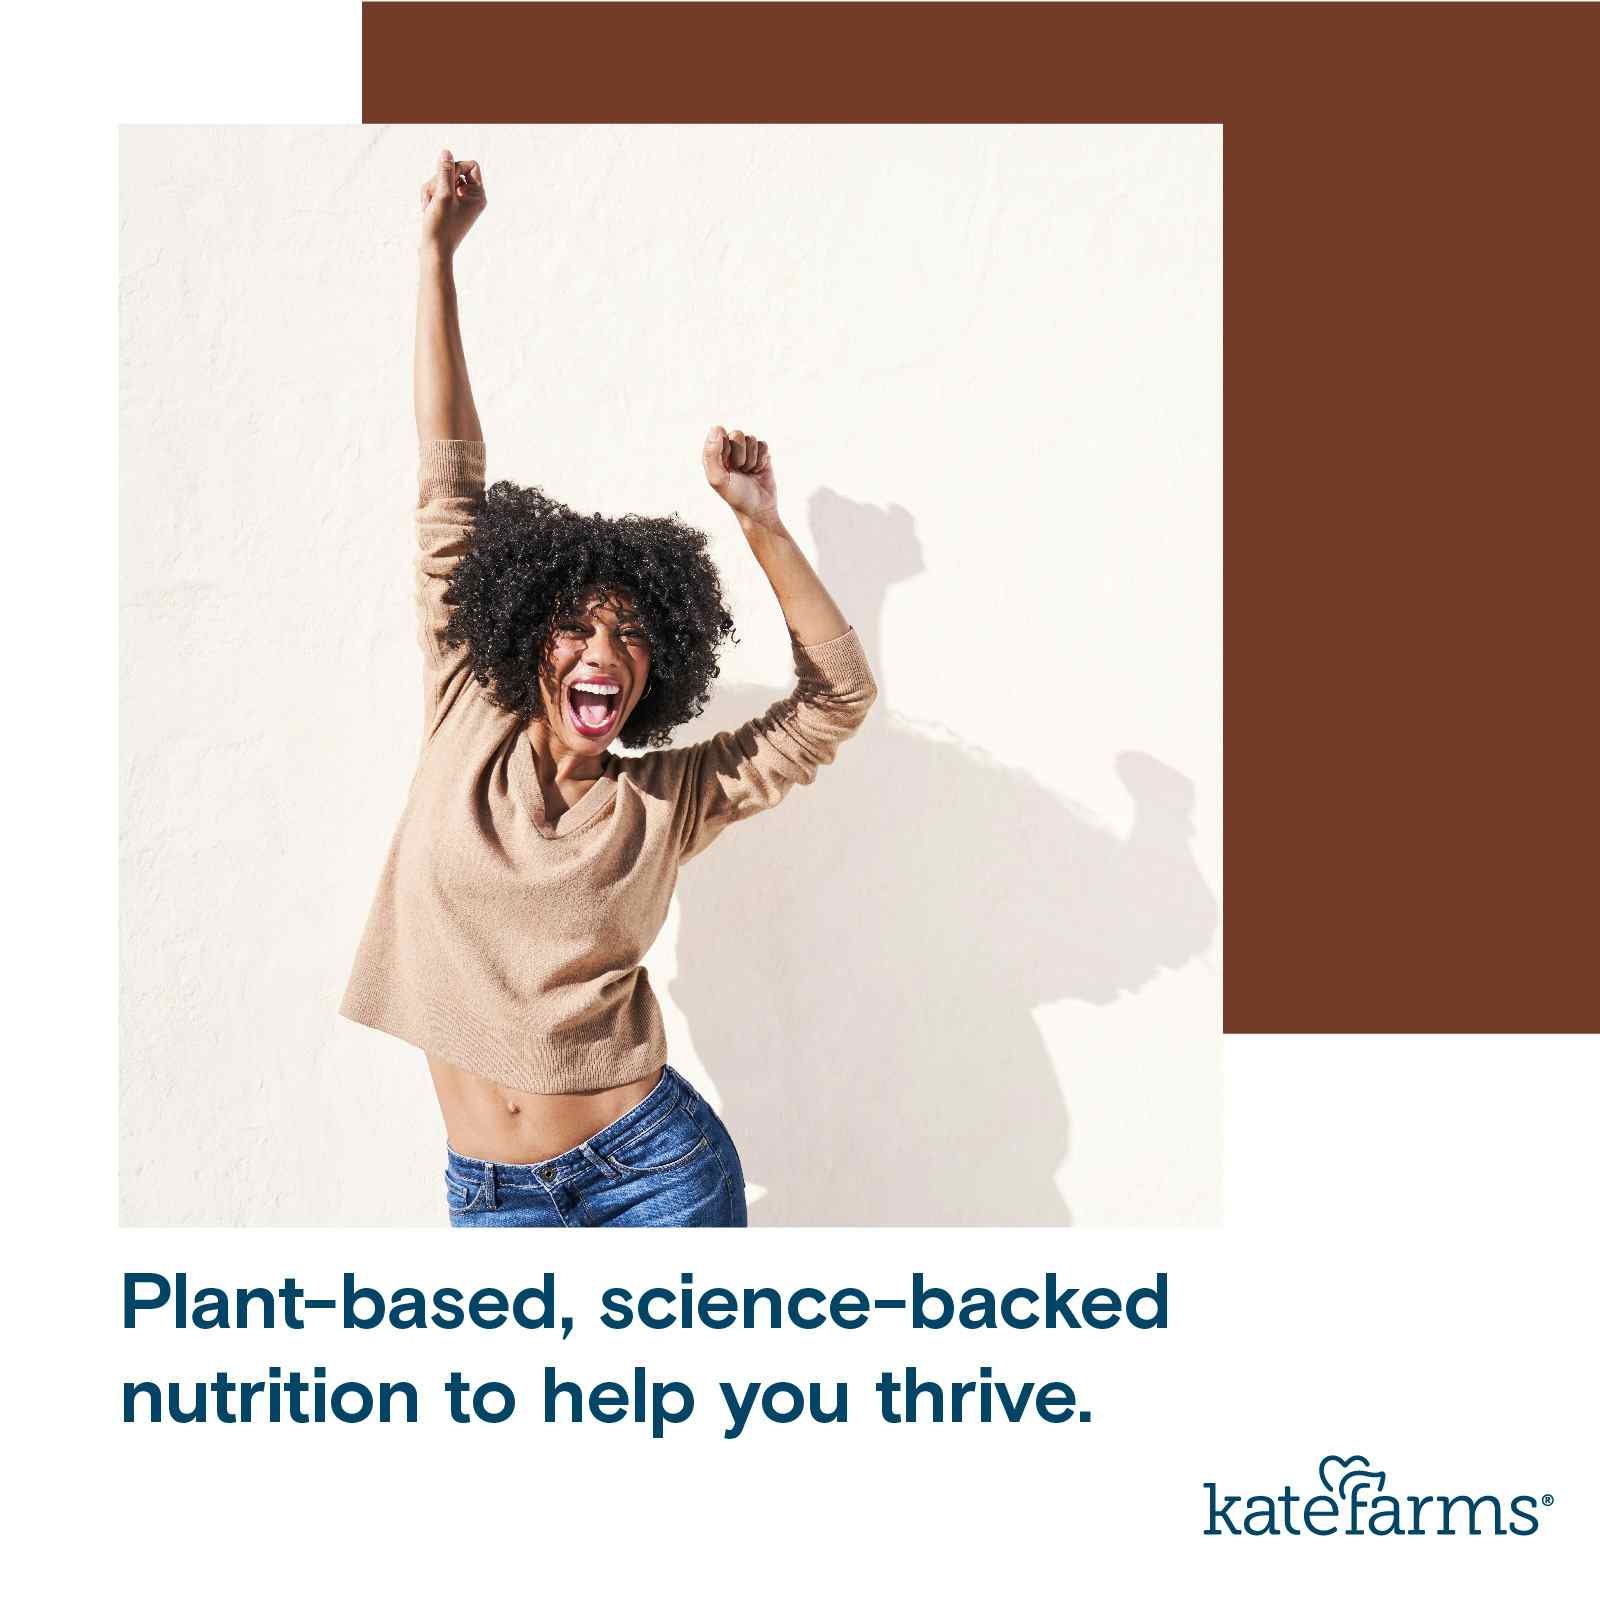 Kate Farms Nutrition Shake